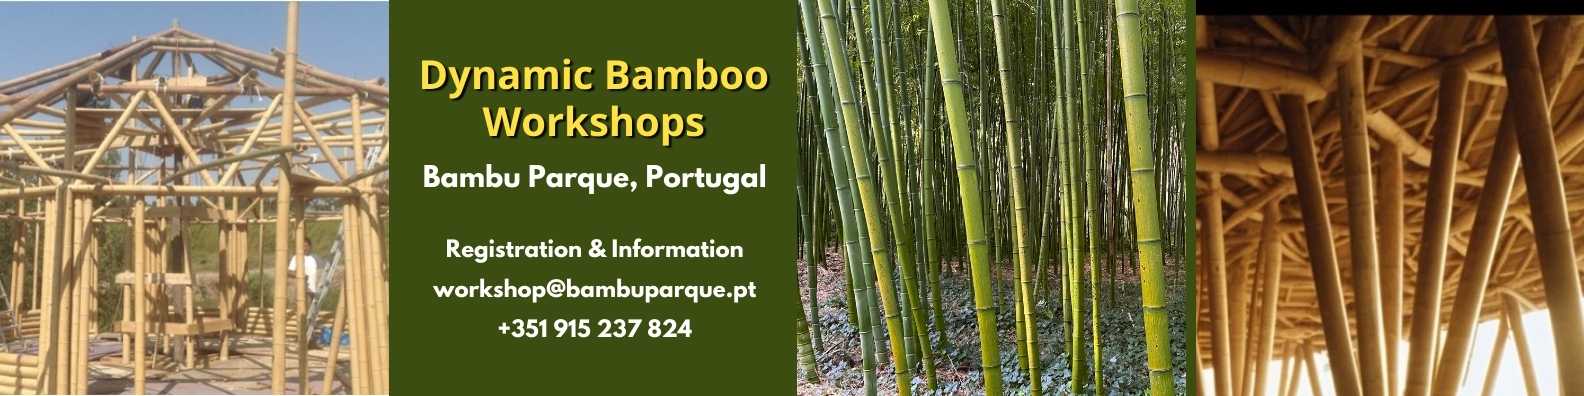 Bamboo School Workshop Banner